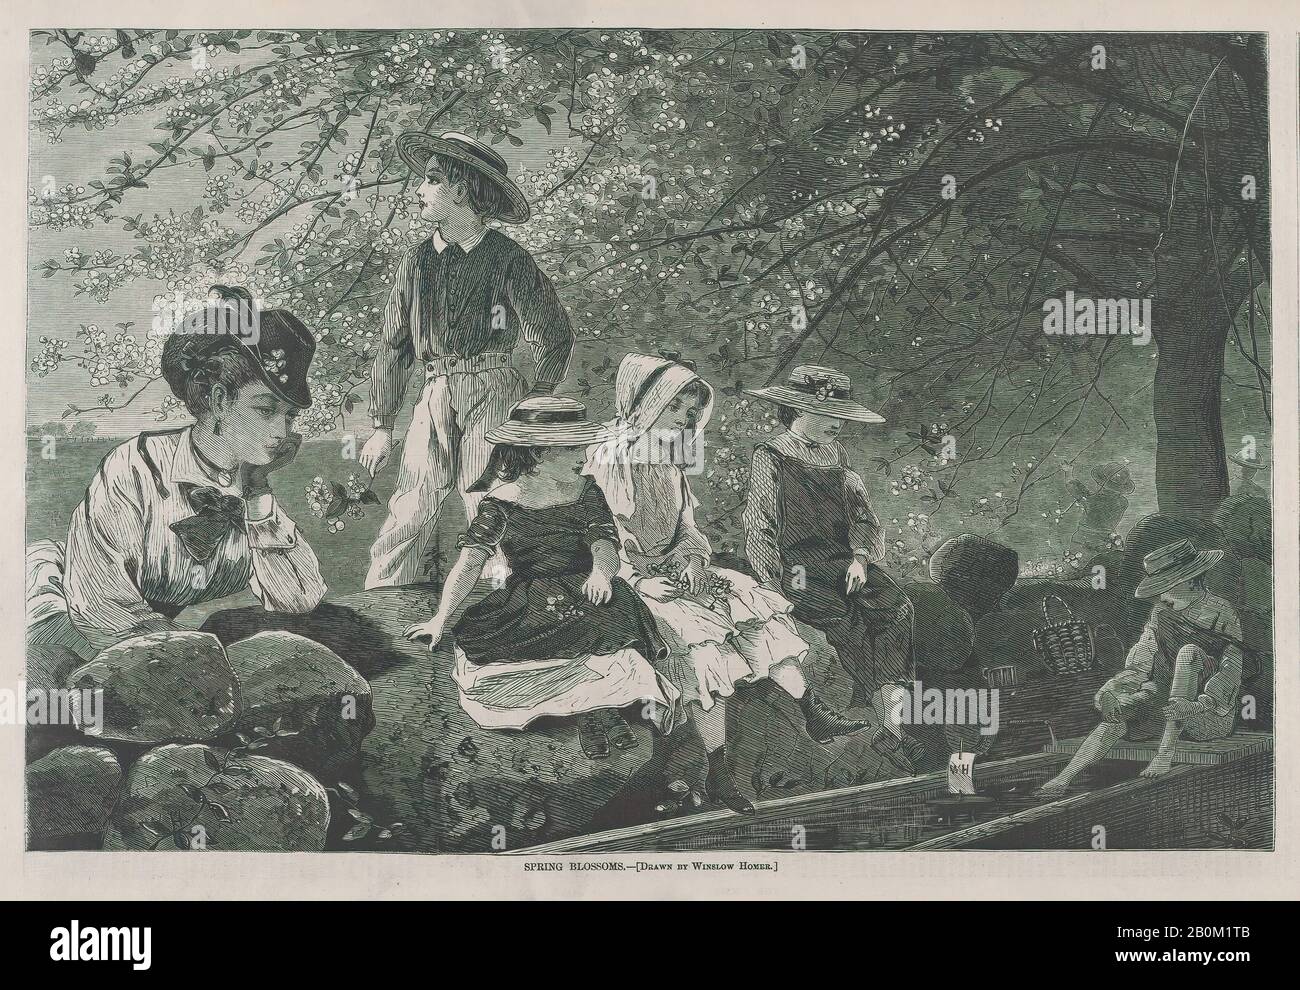 Nach Winslow Homer Blüht Spring Blossoms (Harper's Weekly, Vol. 14), Nach Winslow Homer (American, Boston, Massachusetts, 186-10 Prouts Neck, Maine), 12. Mai 1870, Holzgravur, Bild: 9 1/8 x 13 7/8 Zoll. (23,2 x 35,2 cm), Blatt: 10 11/16 x 15 15/16 Zoll (27,1 x 40,5 cm), Ausdrucke Stockfoto